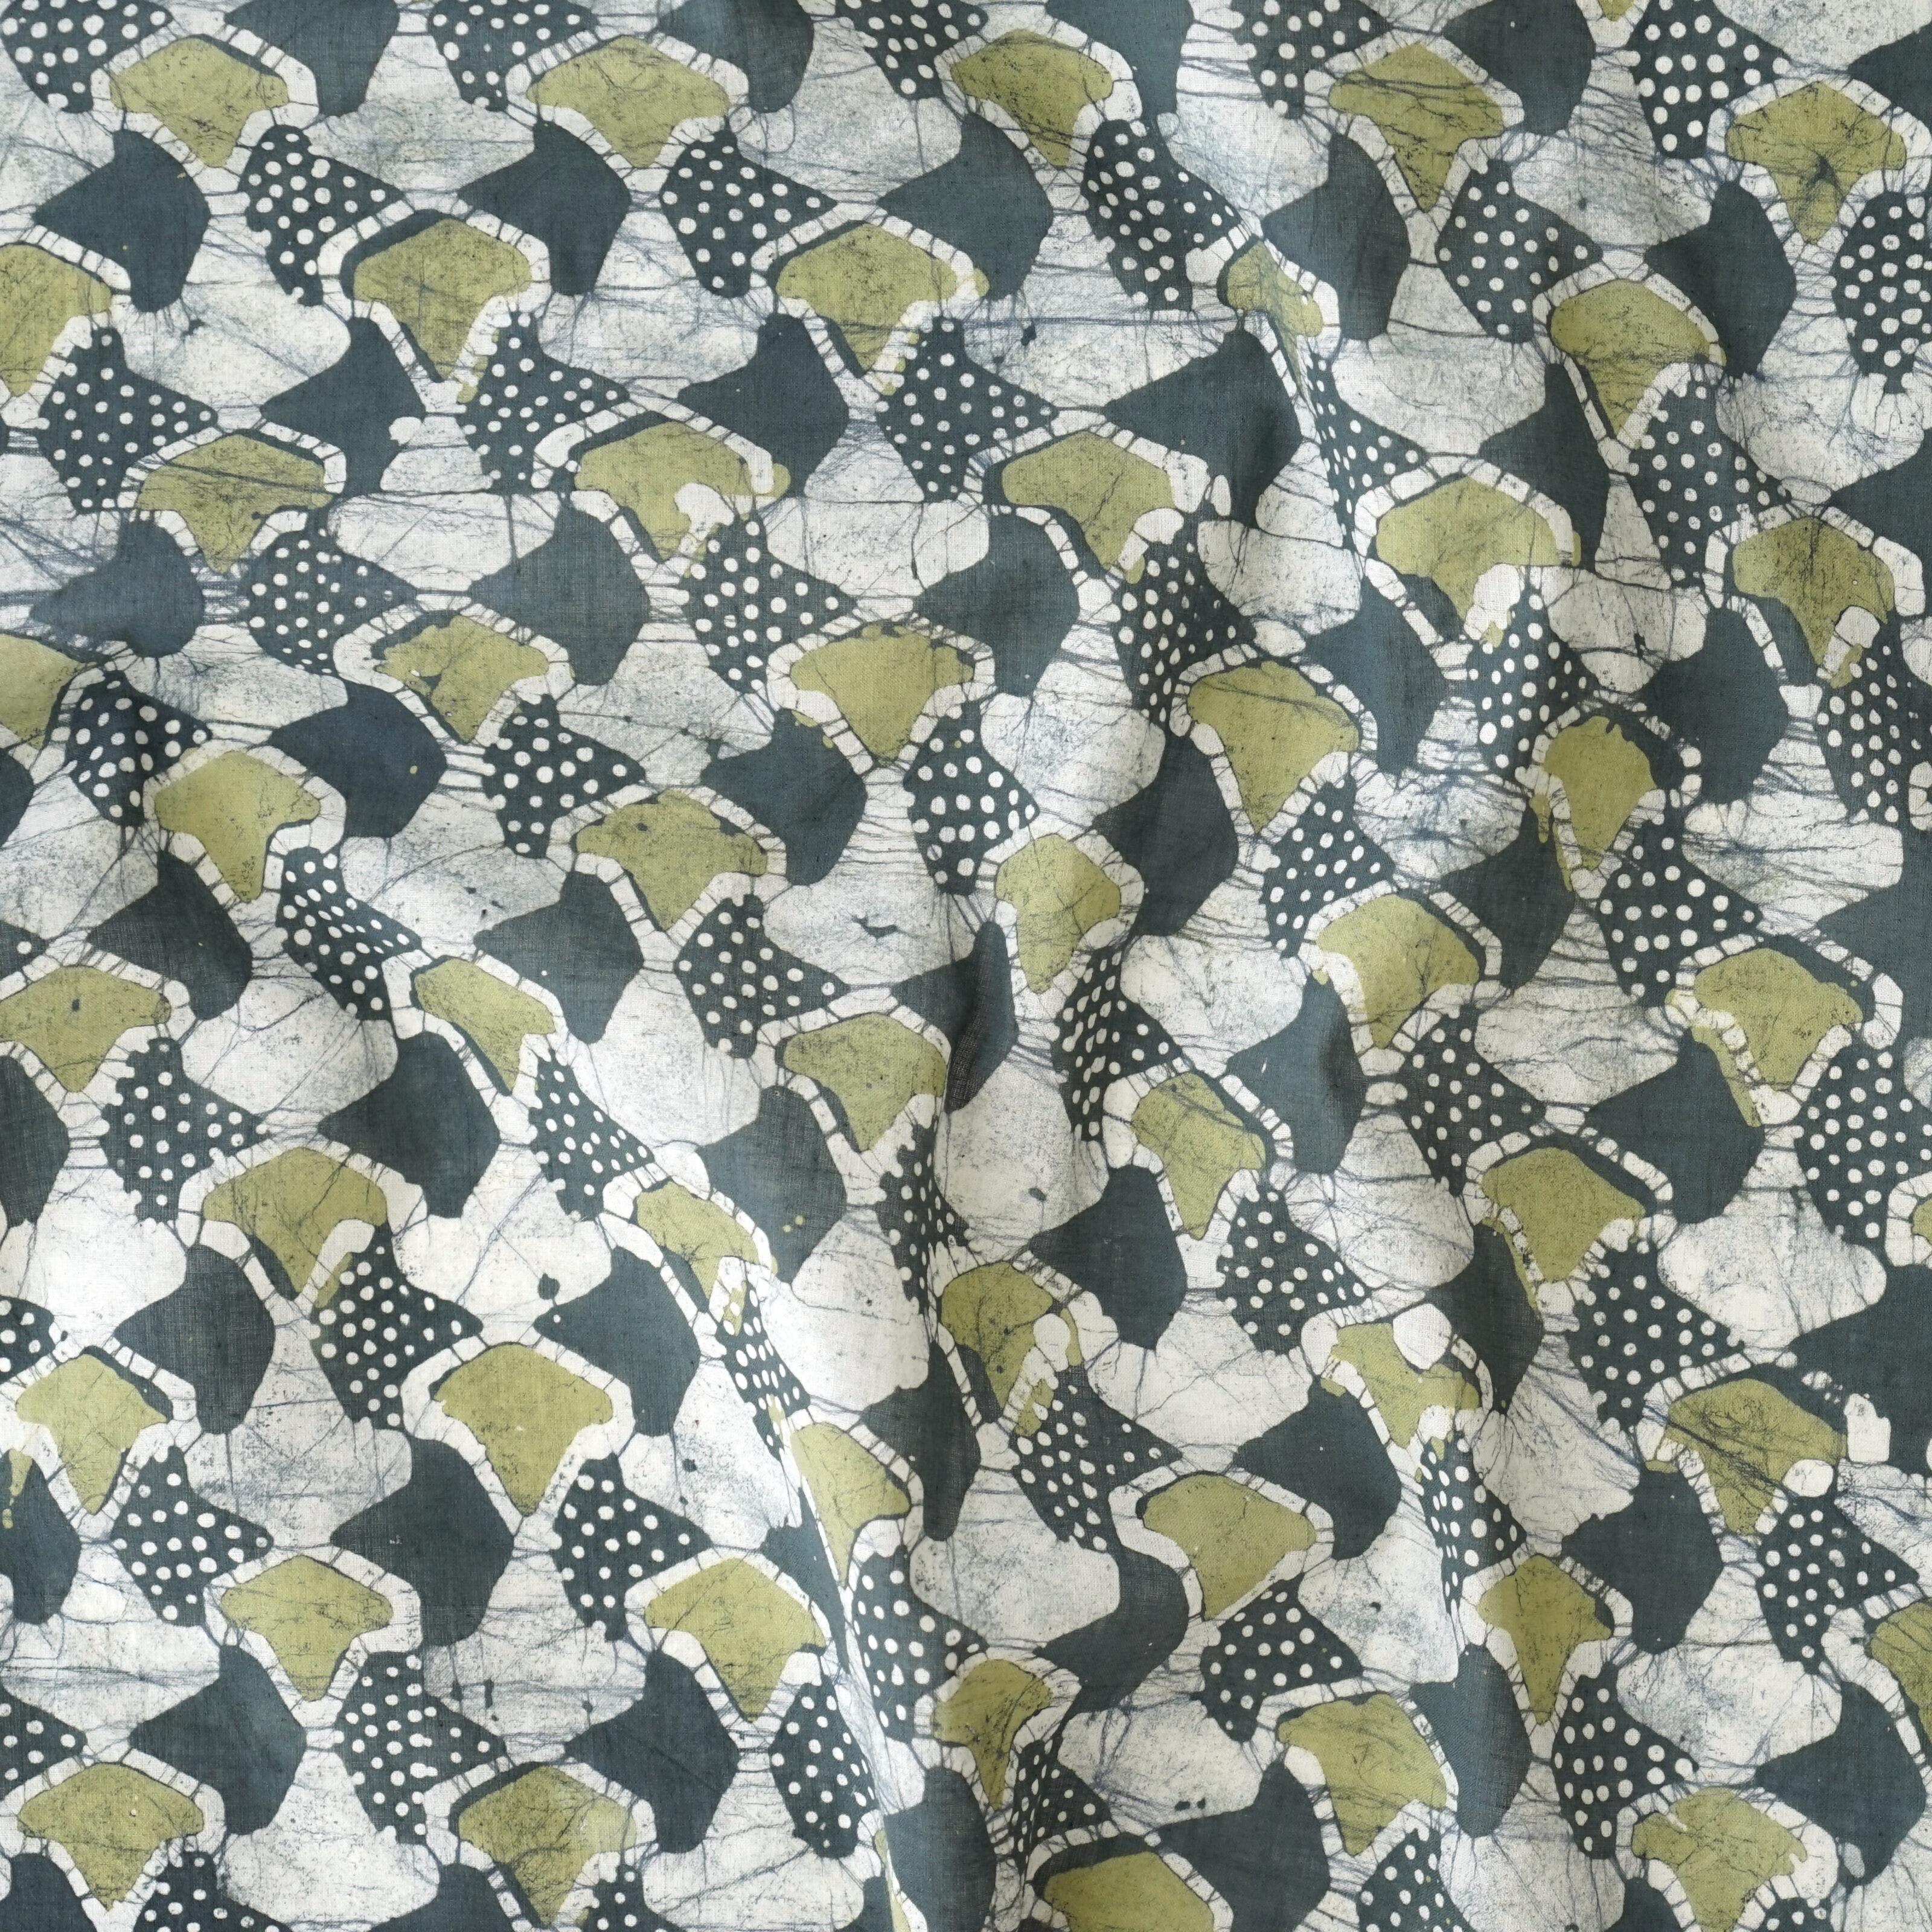 100% Block-Printed Batik Cotton Fabric From India - Sea Sponge Motif - Contrast